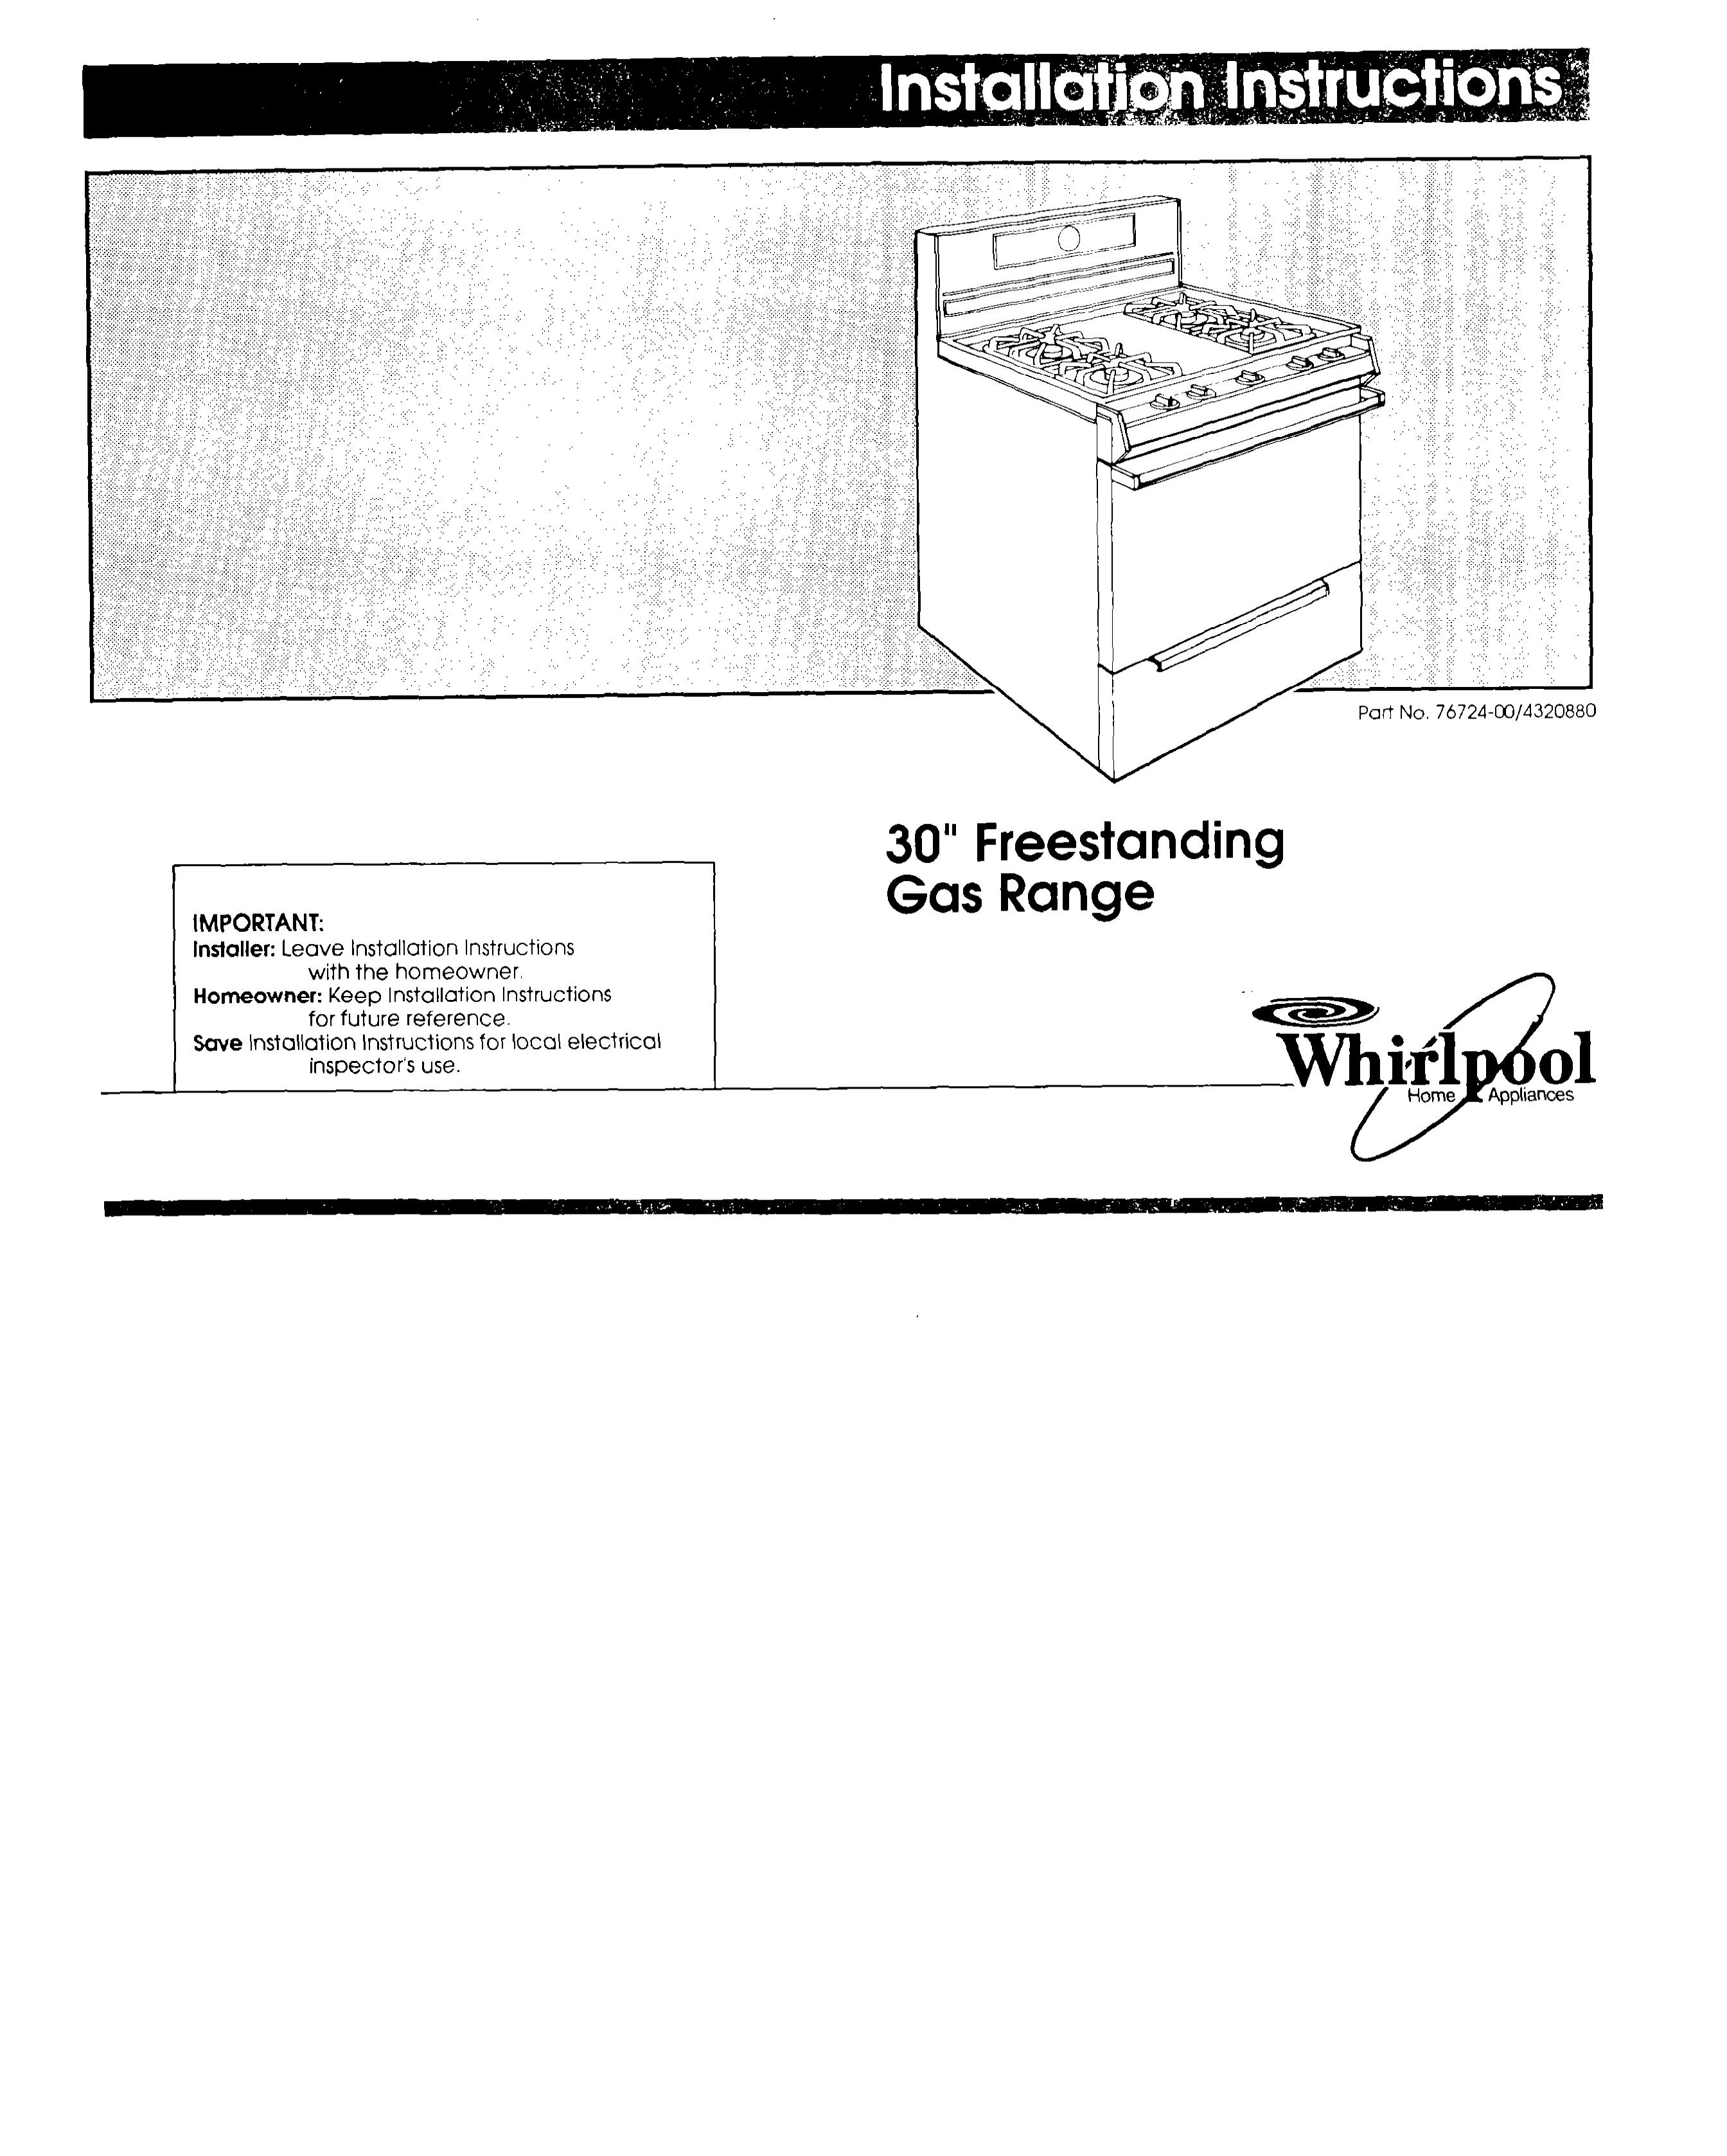 Whirlpool 76724.CO/4320880 Range User Manual